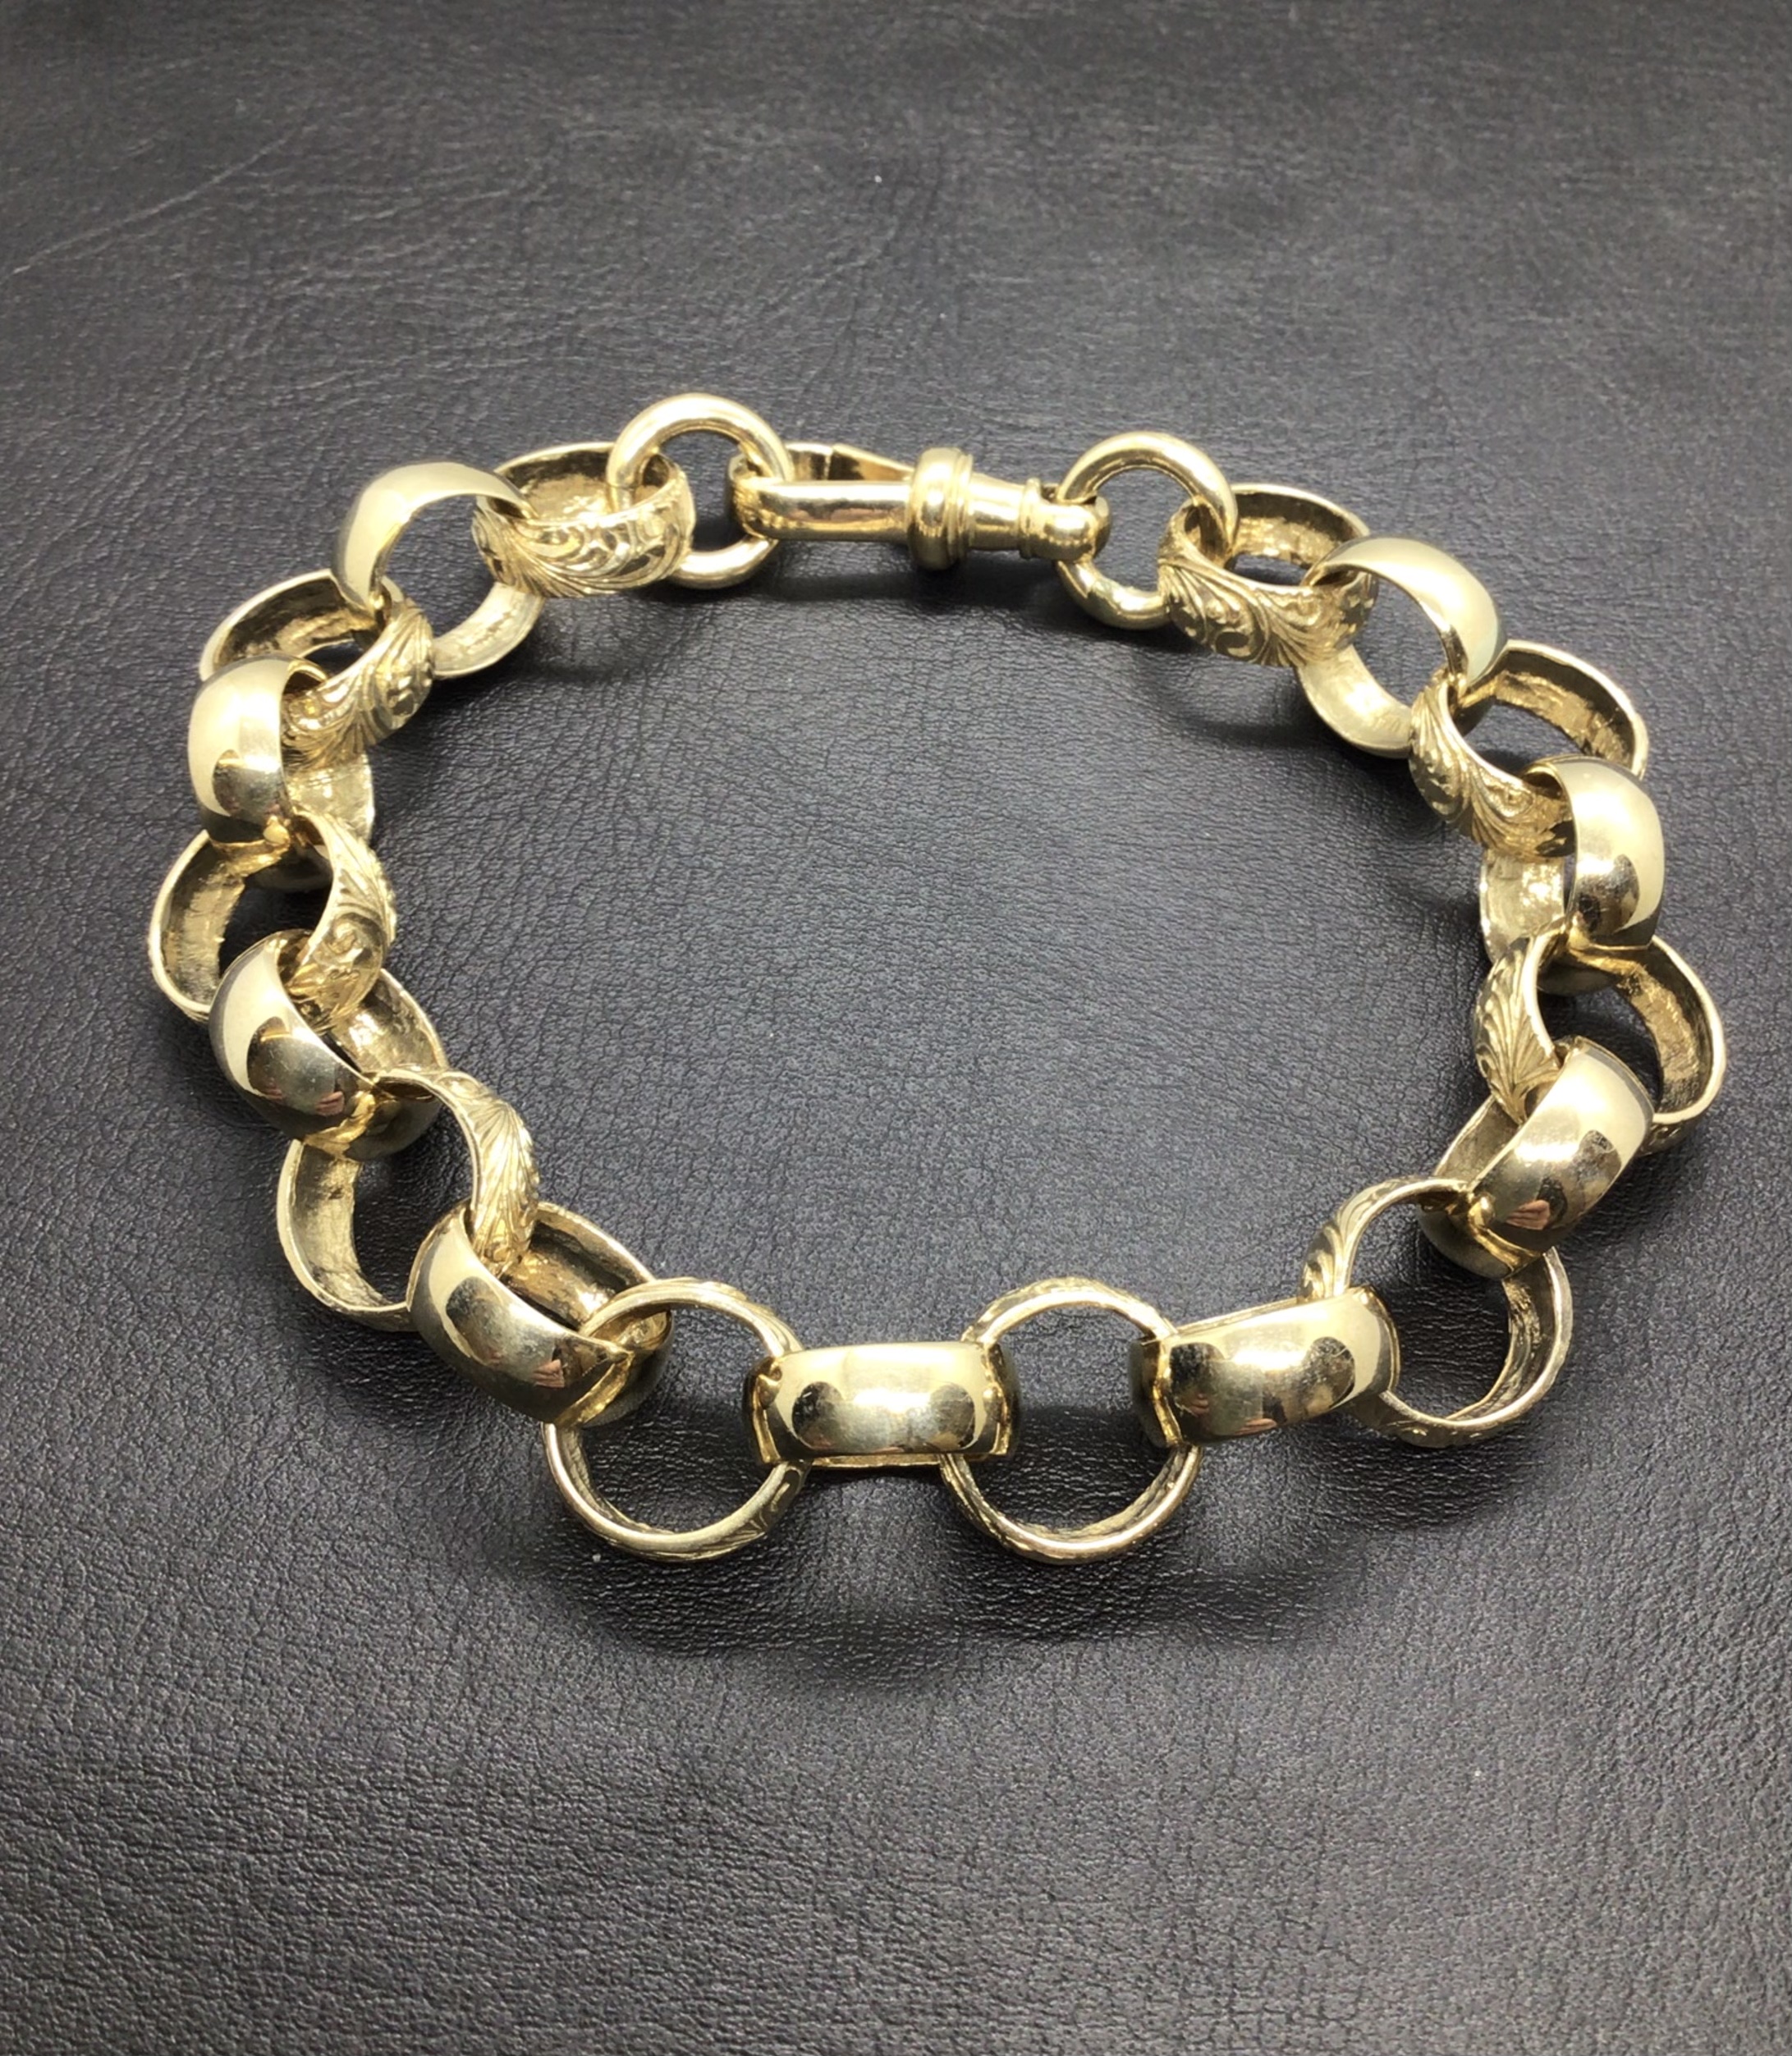 Birthstone Identity Belcher Bracelet in 9ct Gold — The Jewel Shop